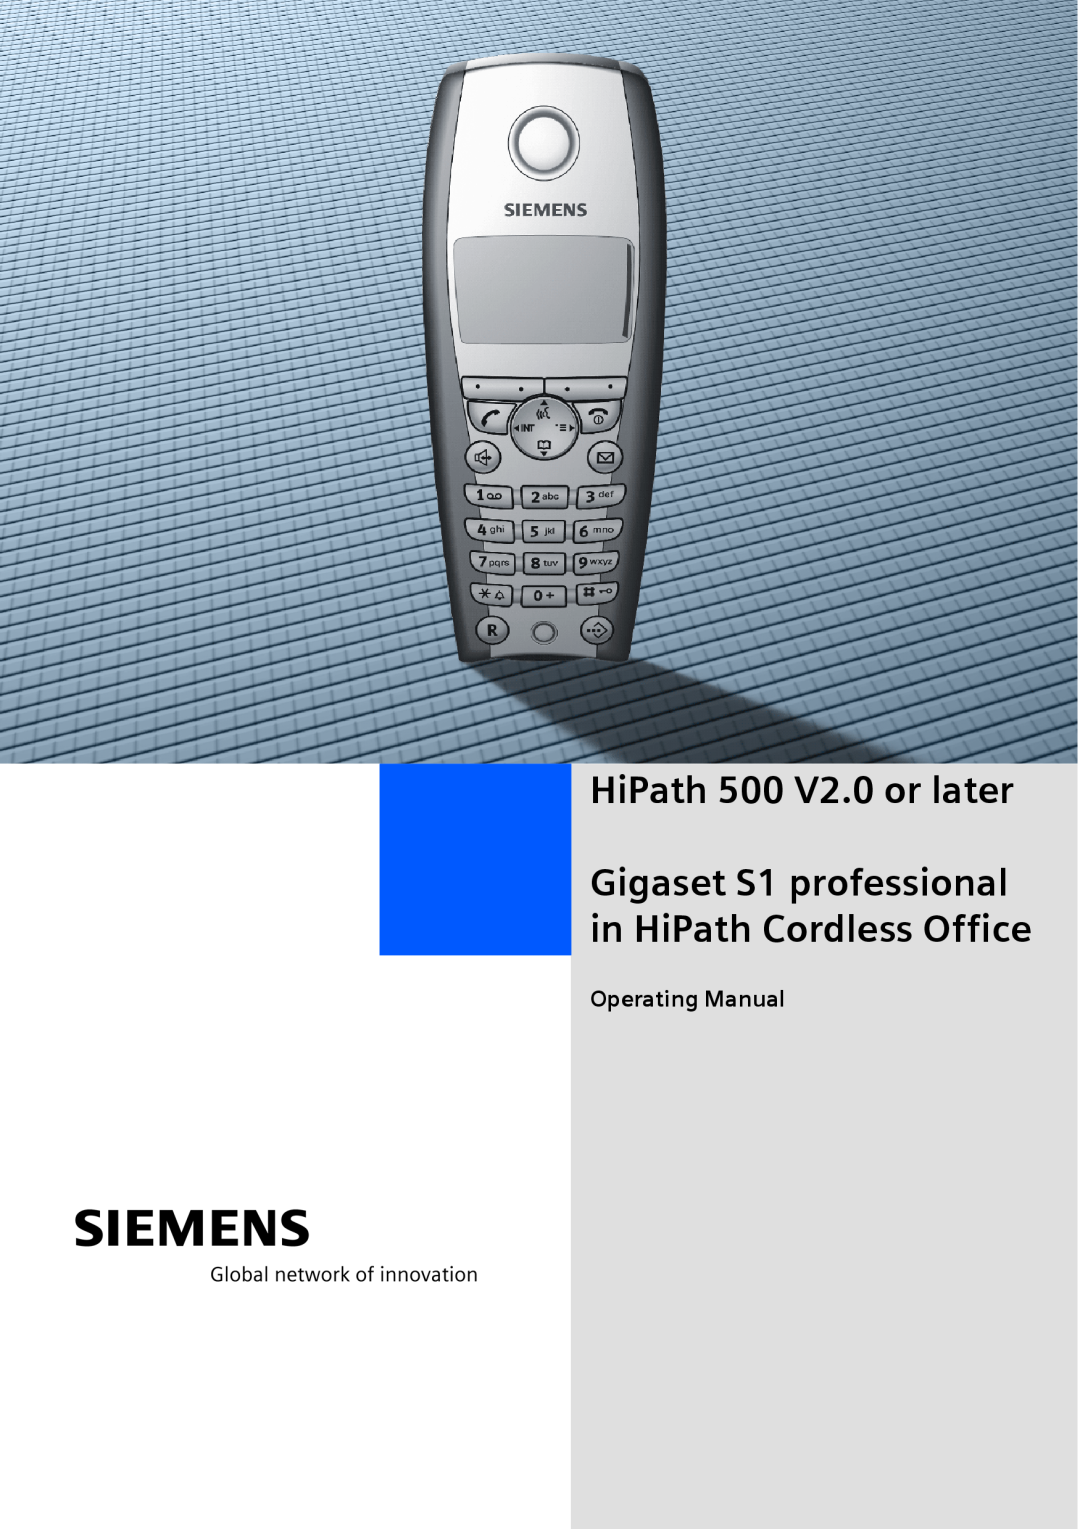 Siemens 500 manual User Guide, Pure 700, Pure 